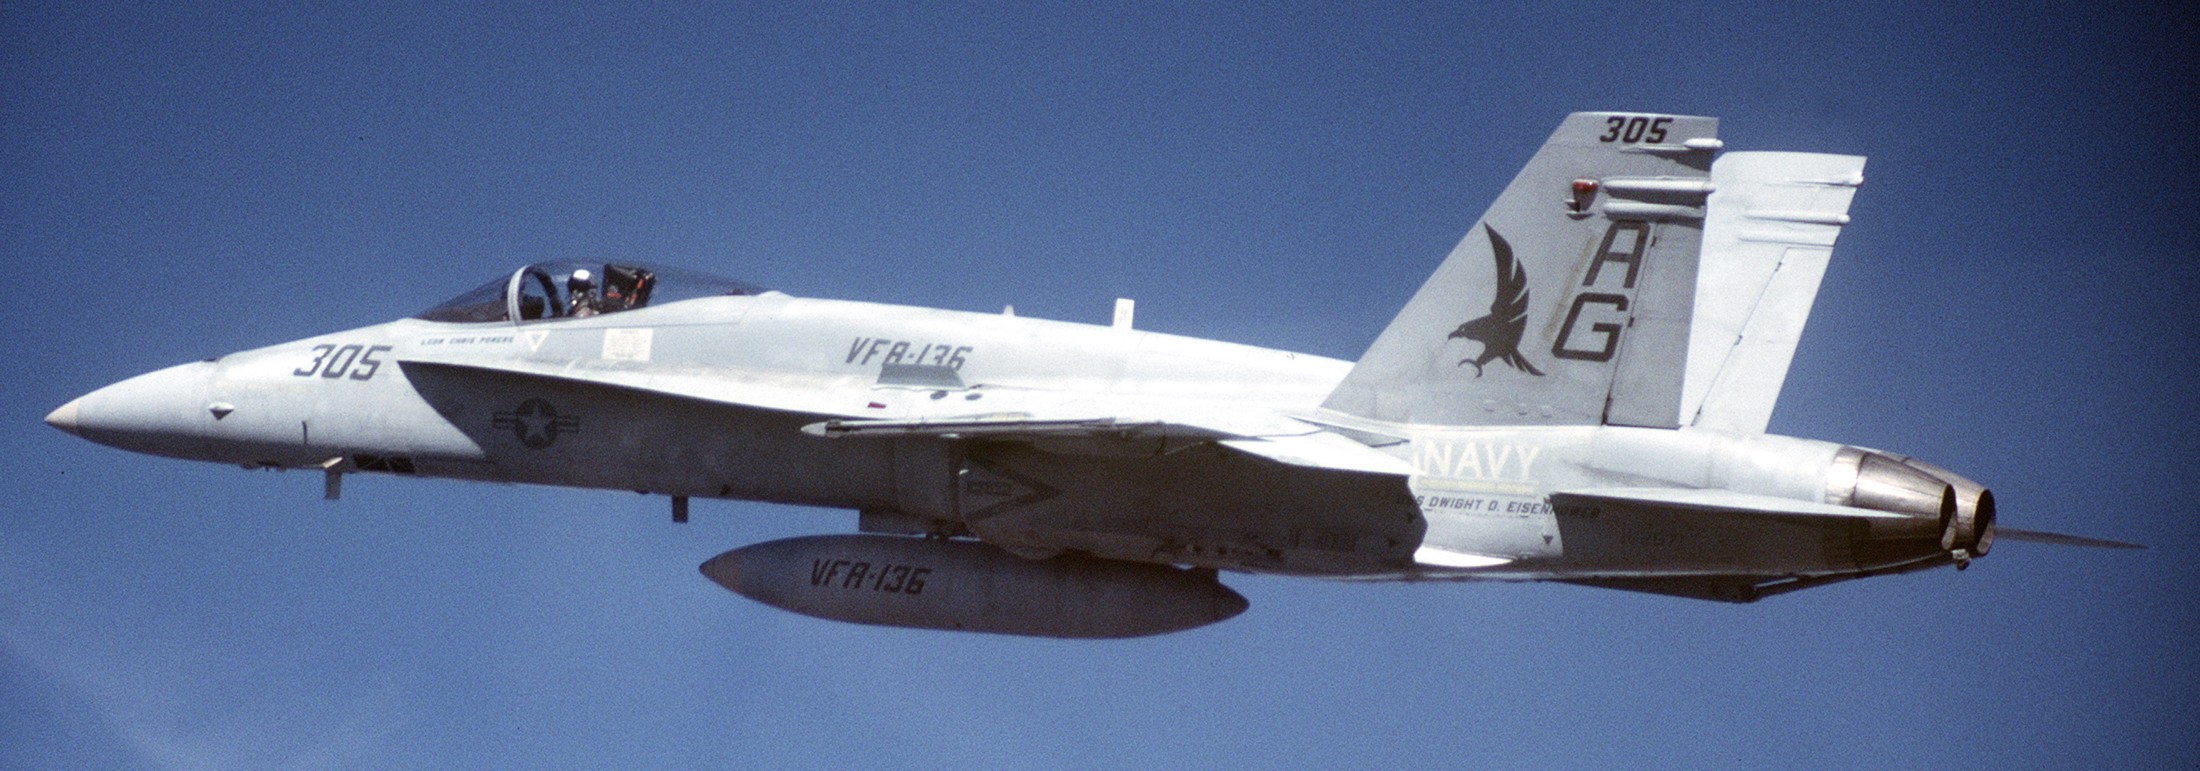 vfa-136 knighthawks strike fighter squadron f/a-18a hornet 1989 55 cvw-7